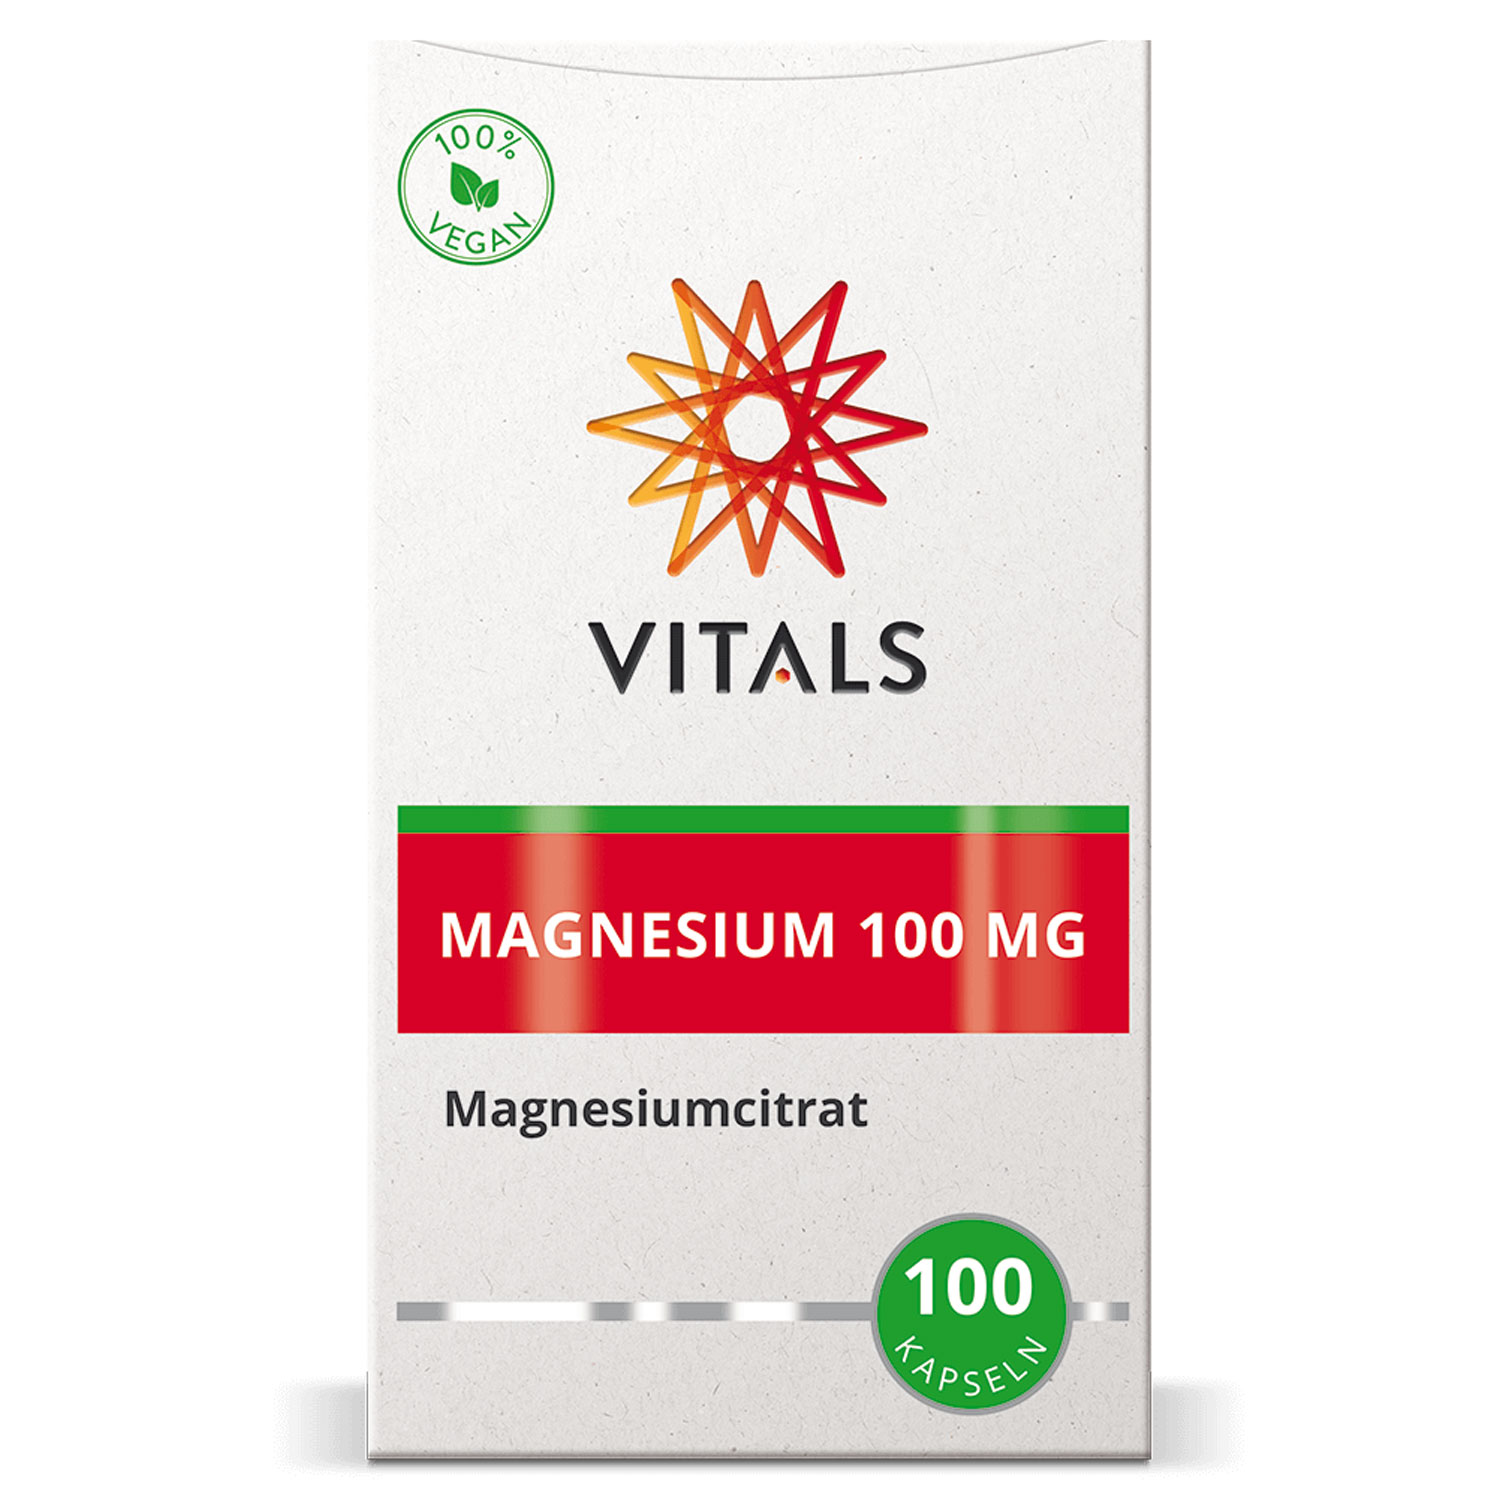 Magnesiumcitrat von Vitals - Verpackung